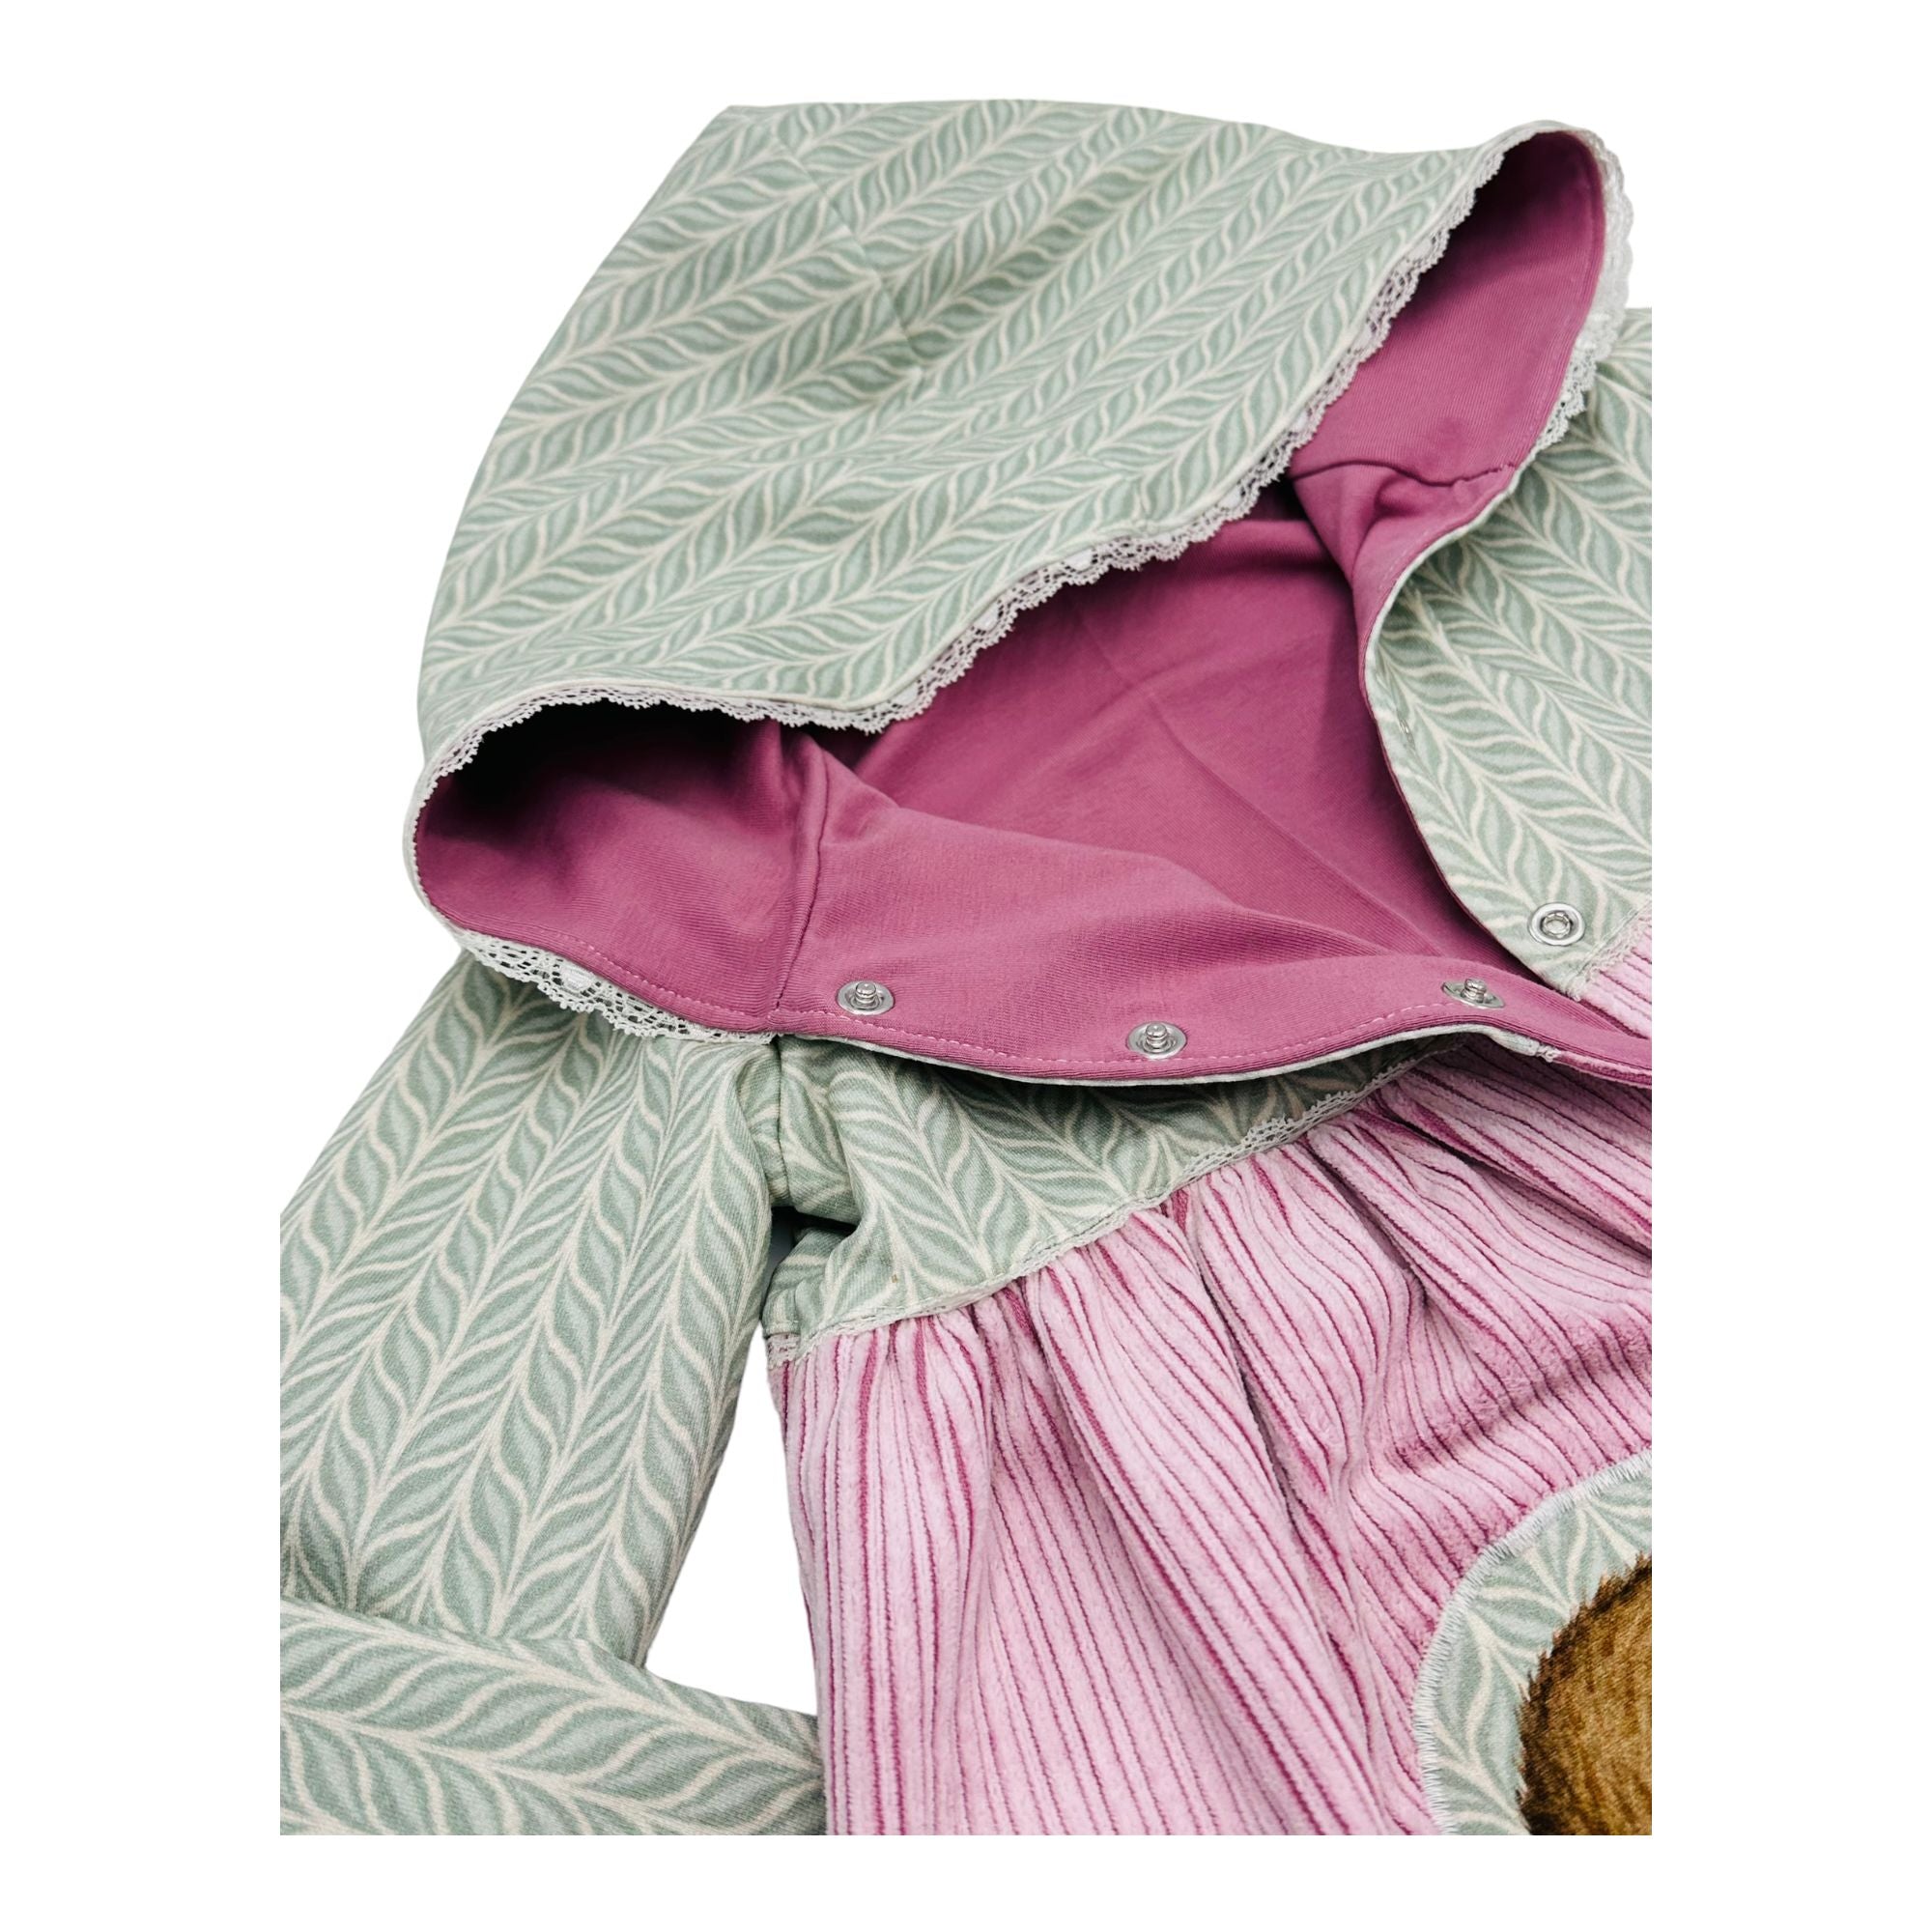 Übergangsjacke Mantel süßer Igel hellgrün rosa Breitcord